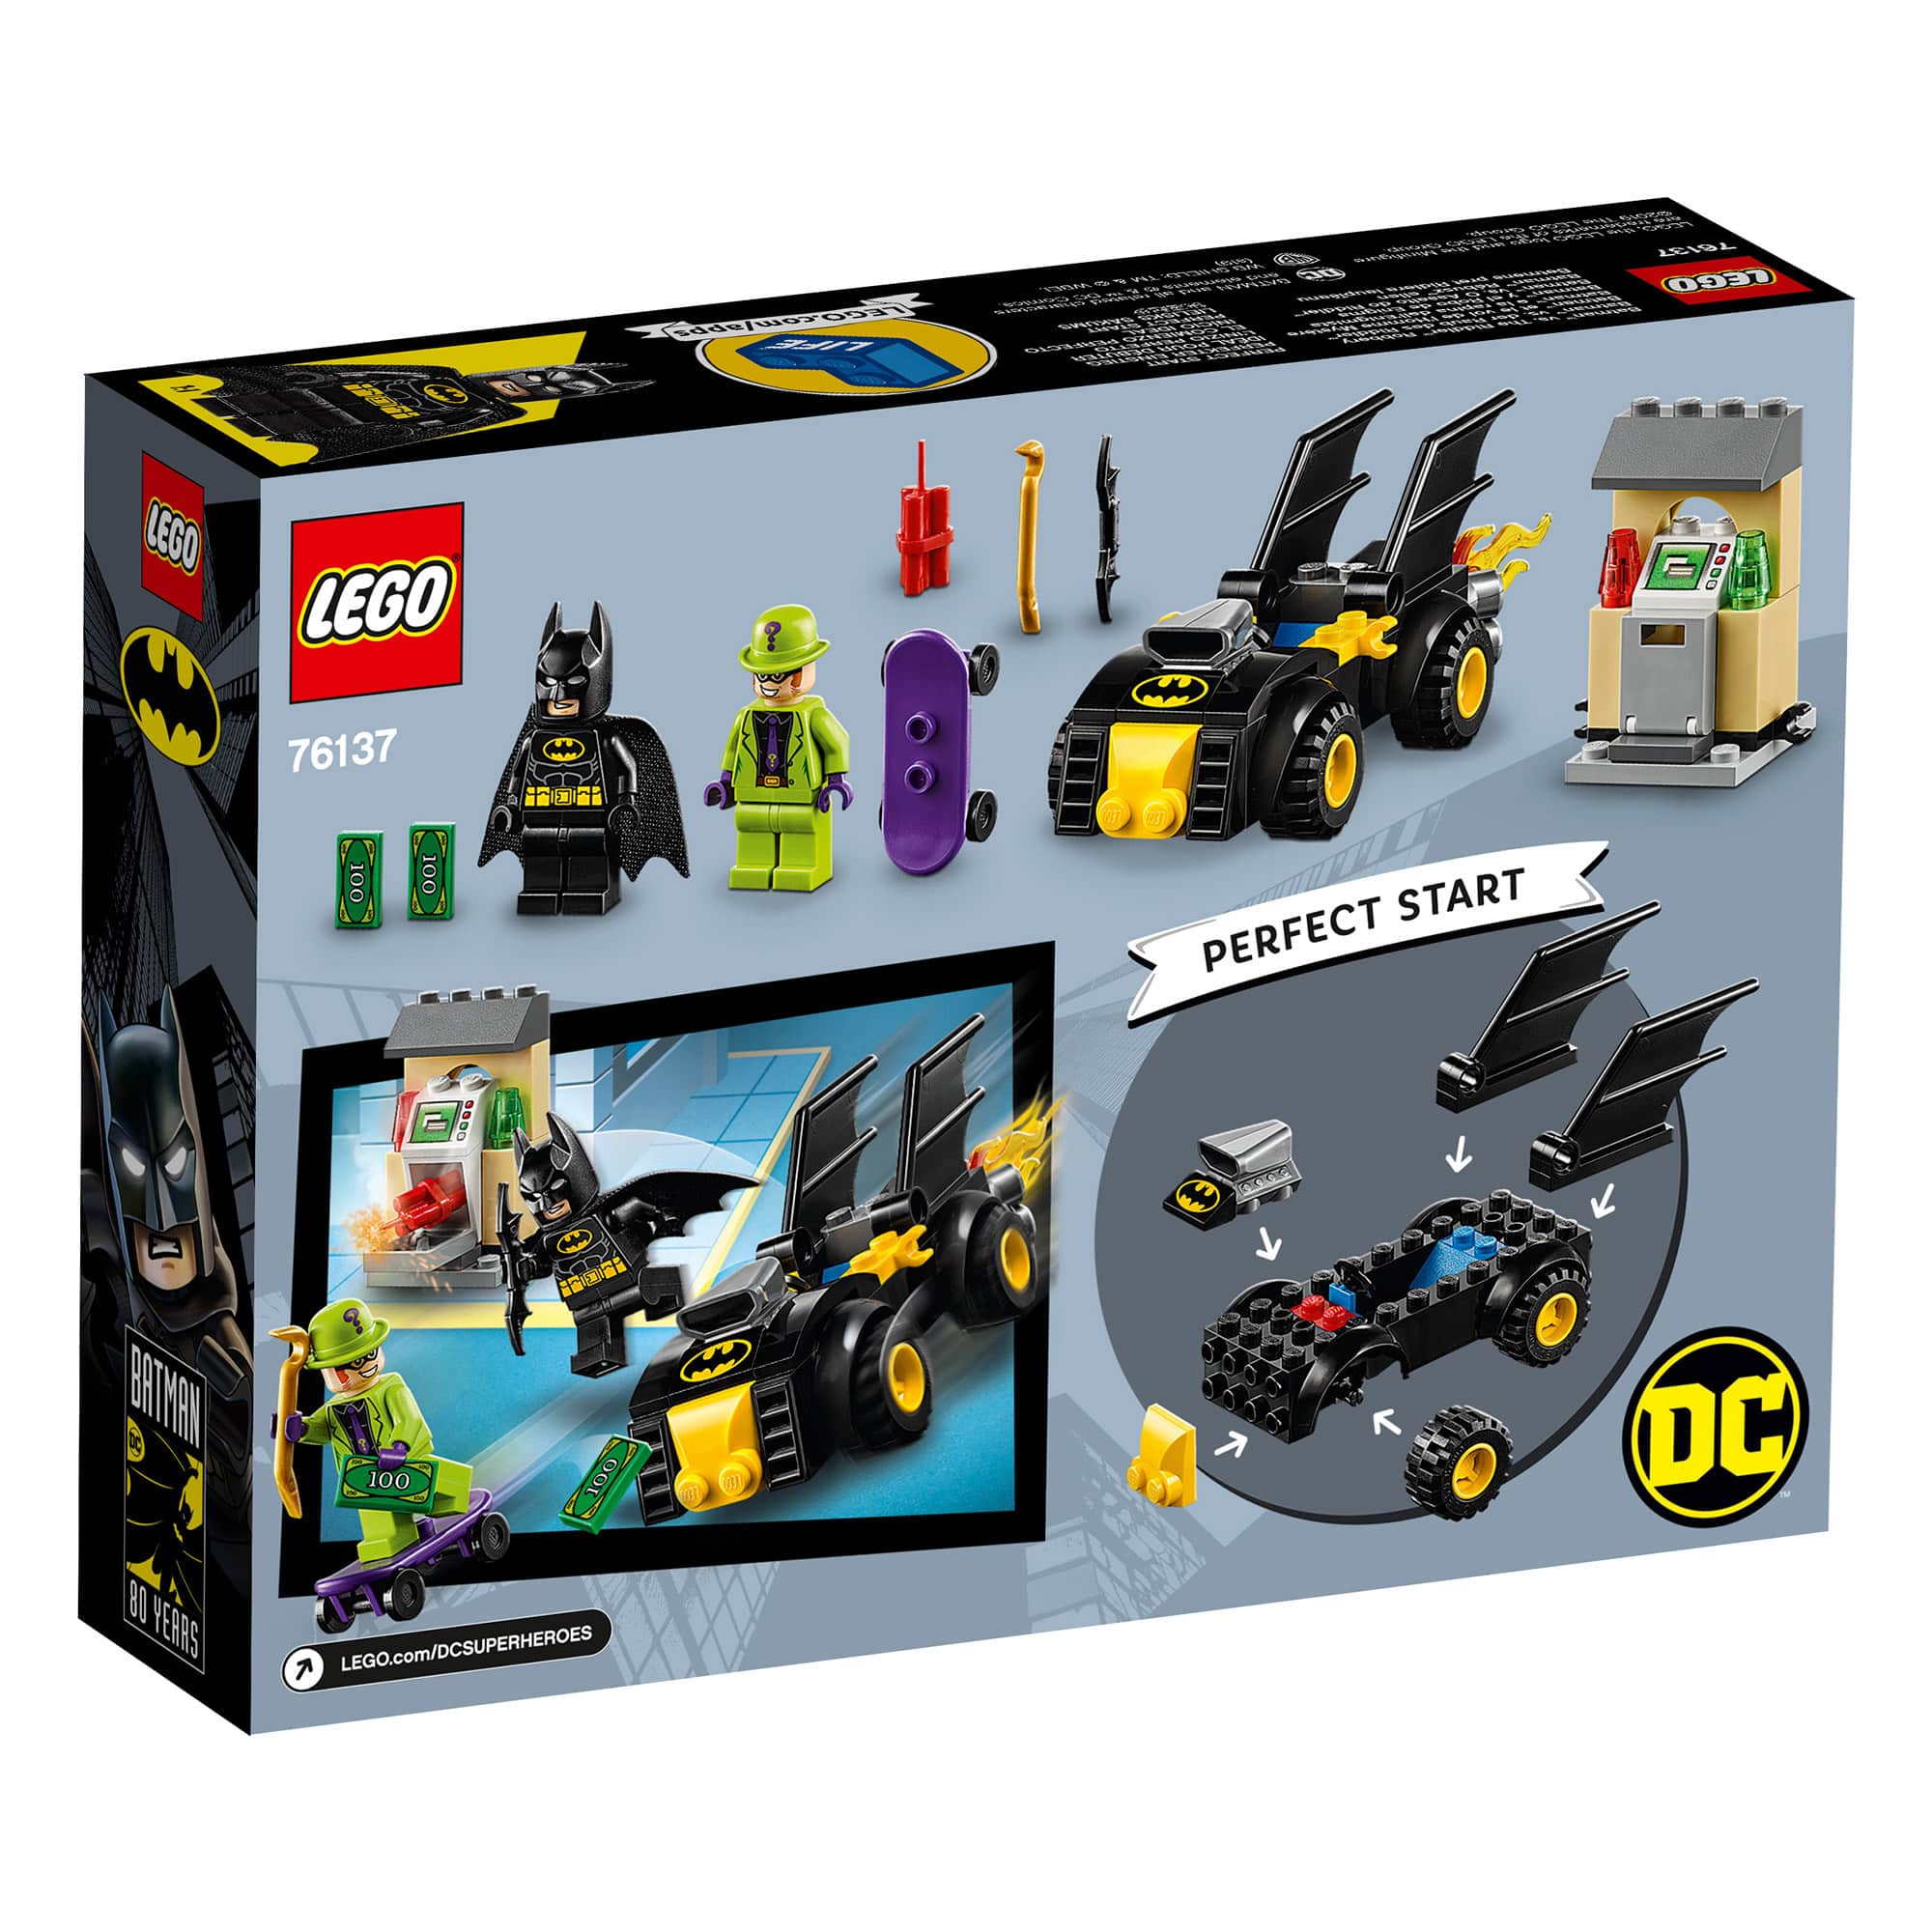 LEGO DC Batman - 76137 Batman vs The Riddler Robbery